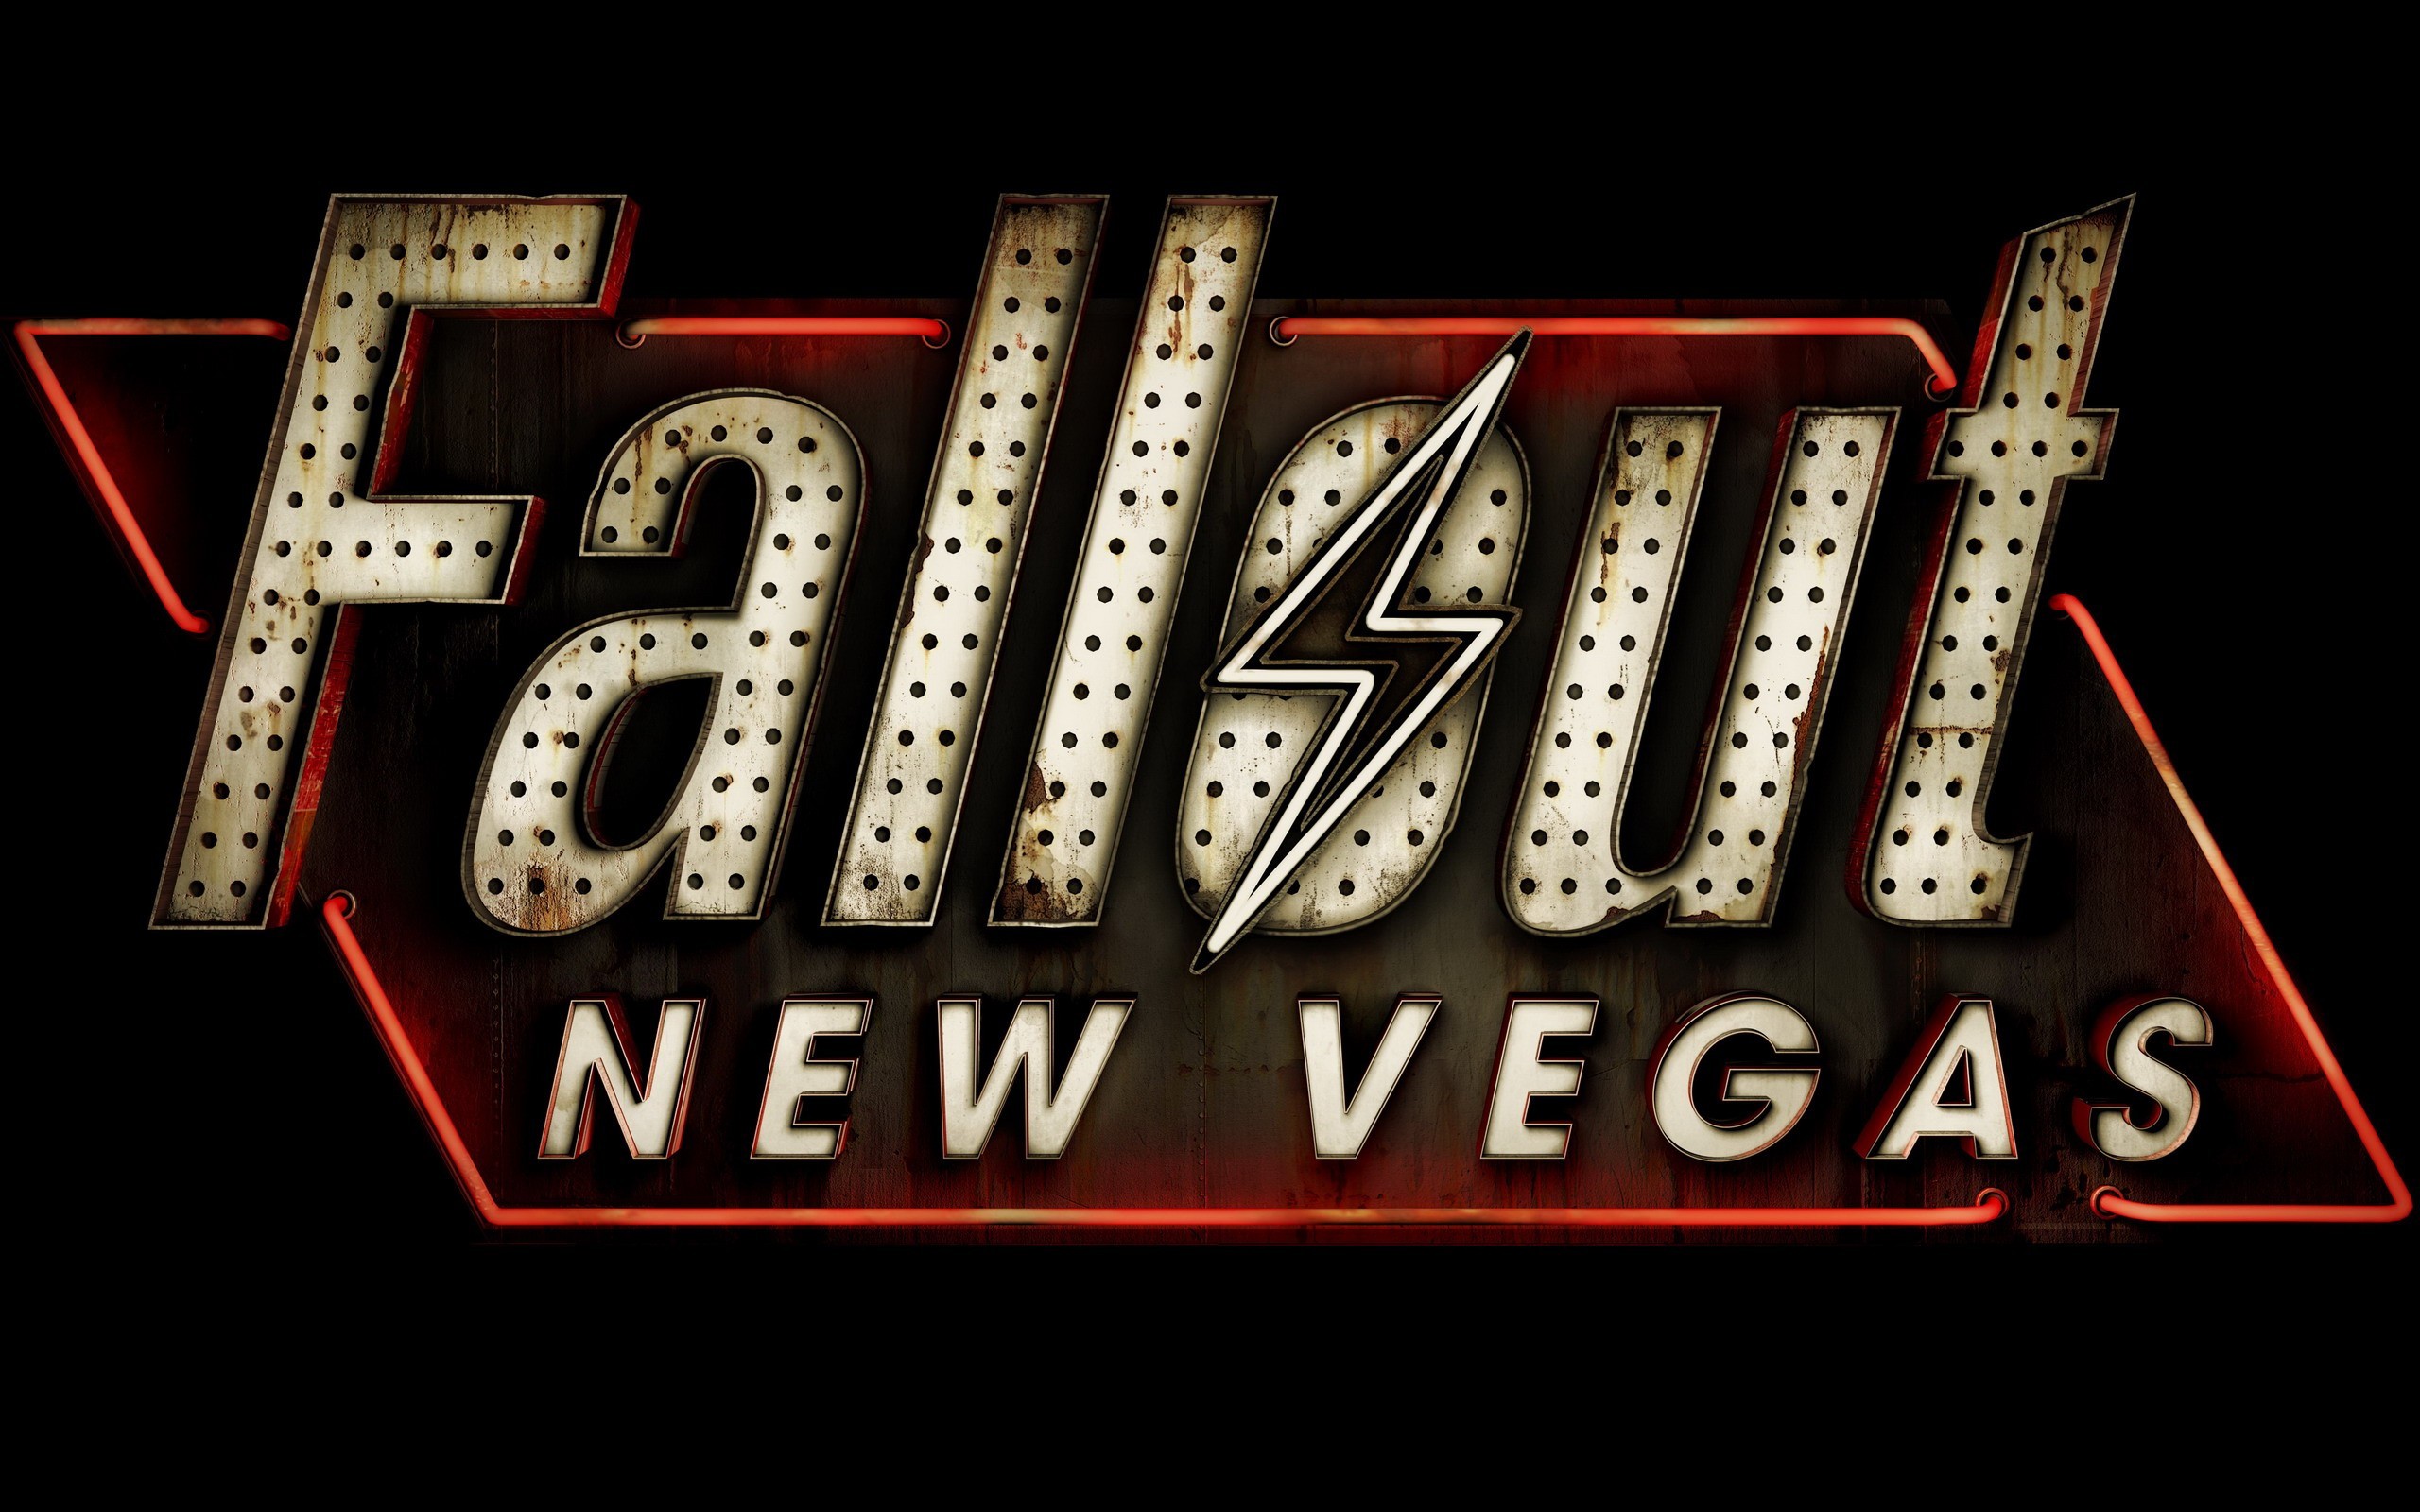 2560x1600 ... x 1600 Original. Description: Download Fallout New Vegas RPG Games  wallpaper ...